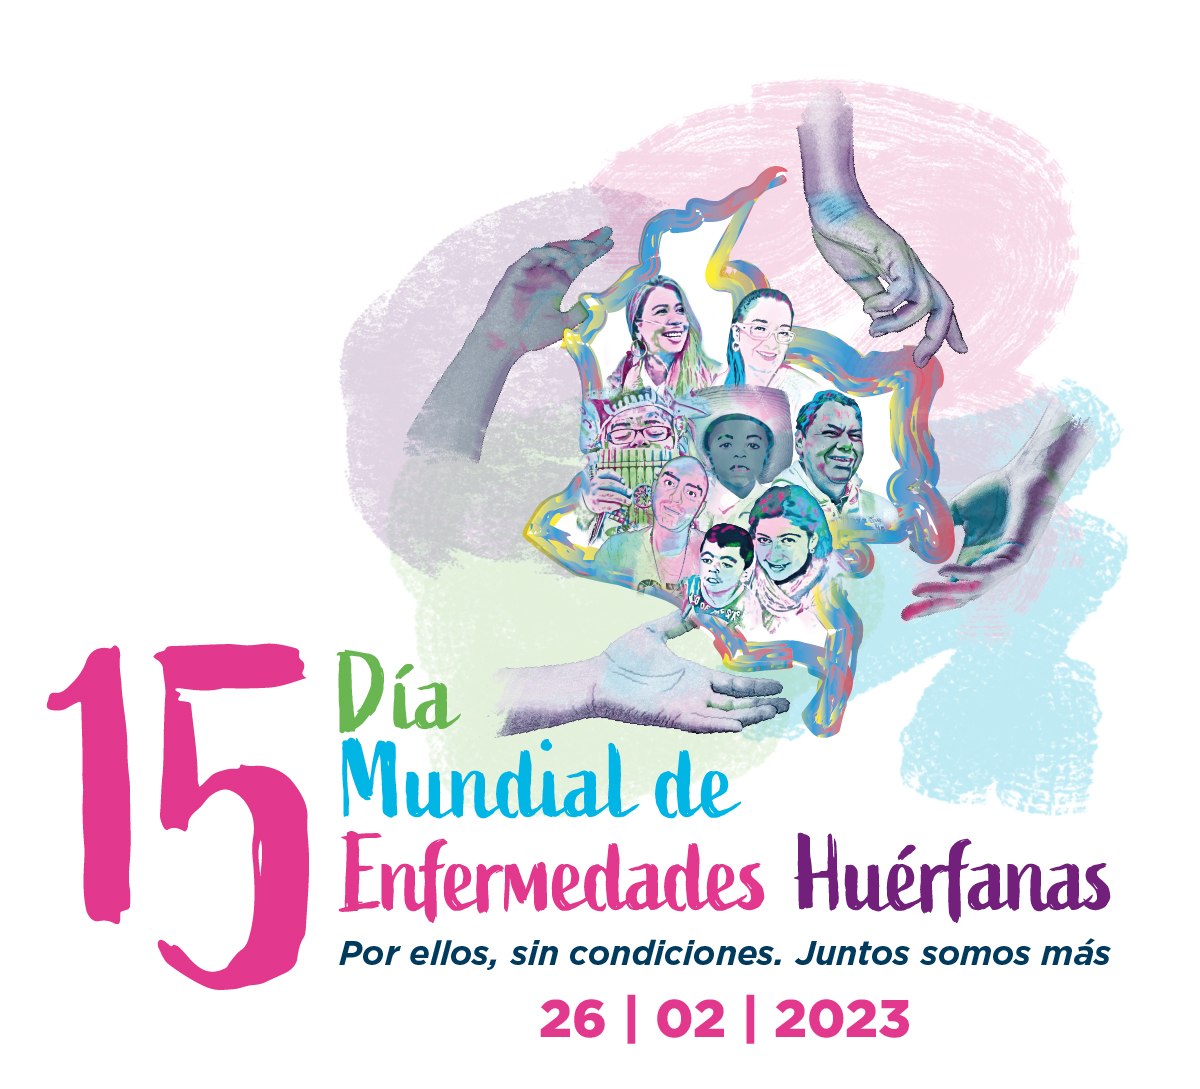 15 dia mundial enfermedades huerfanas colombia